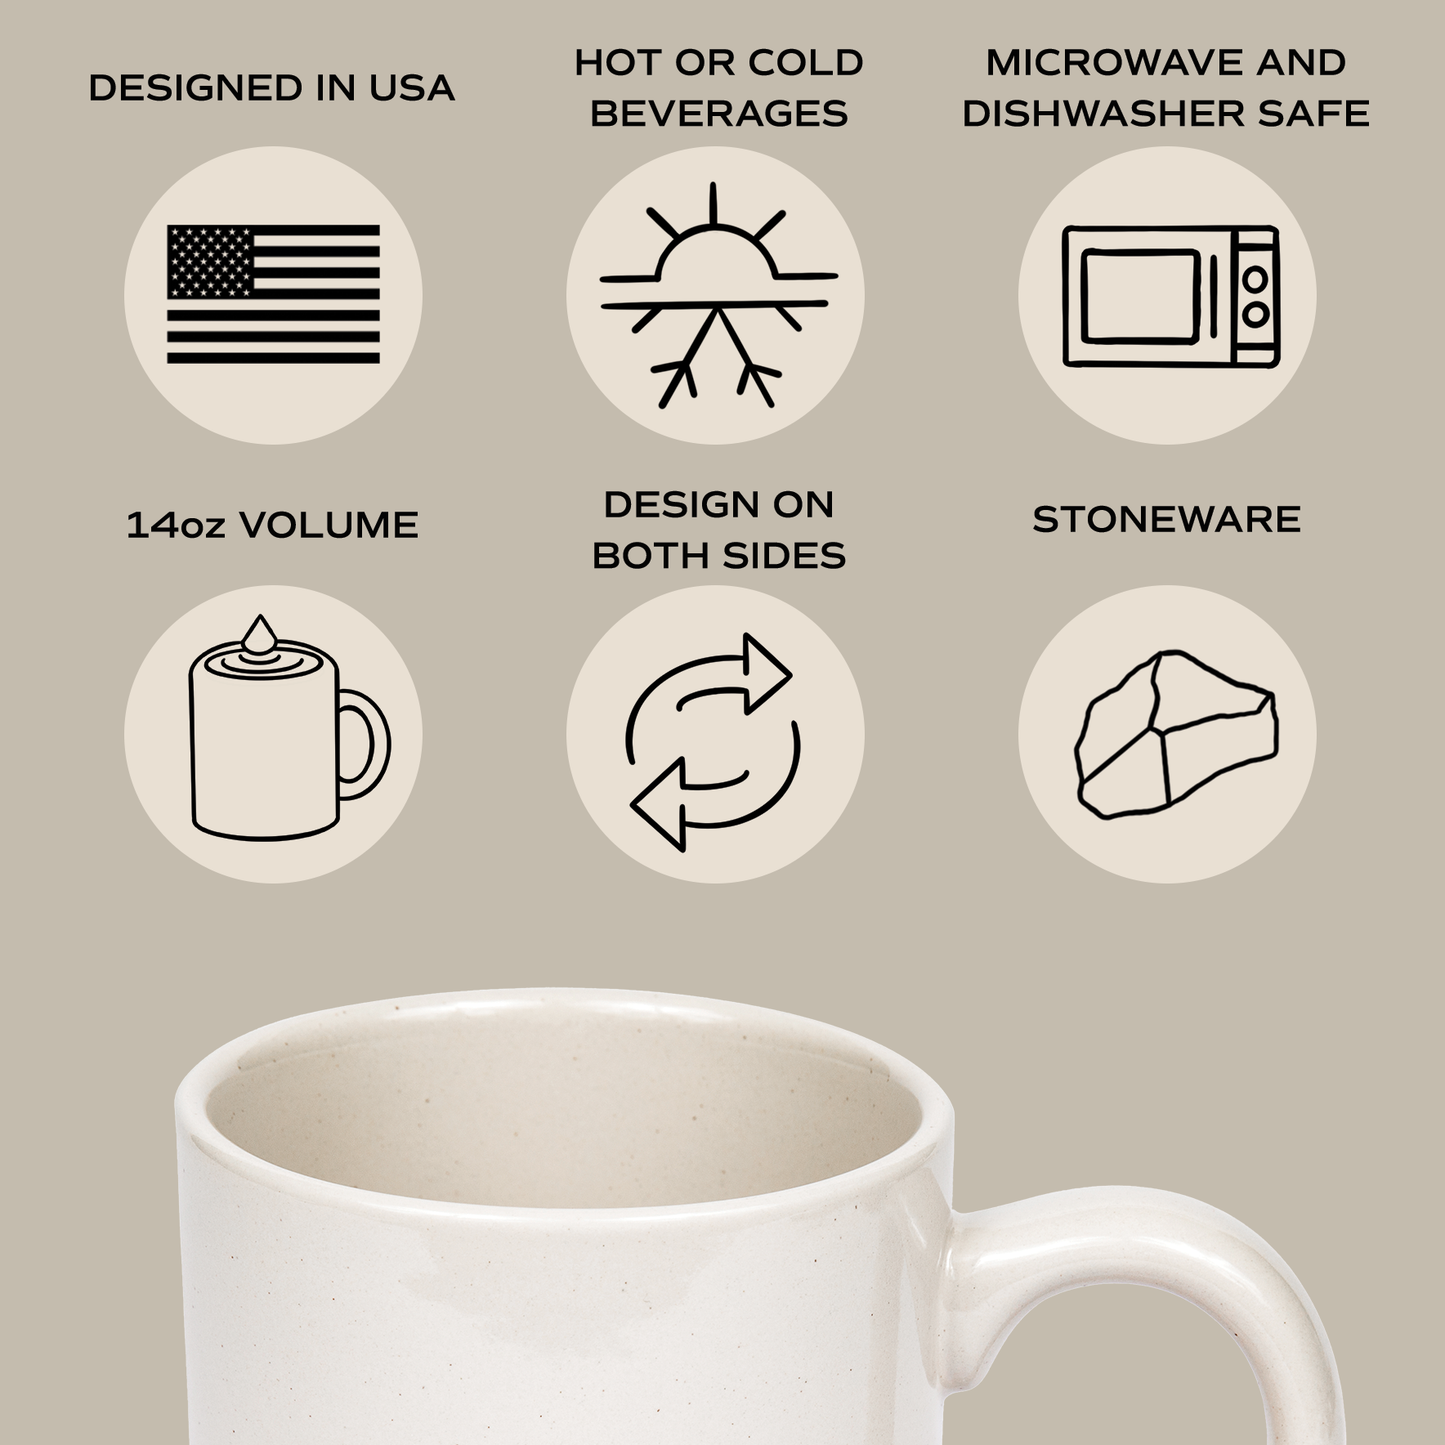 Be Still and Know Stoneware Mug